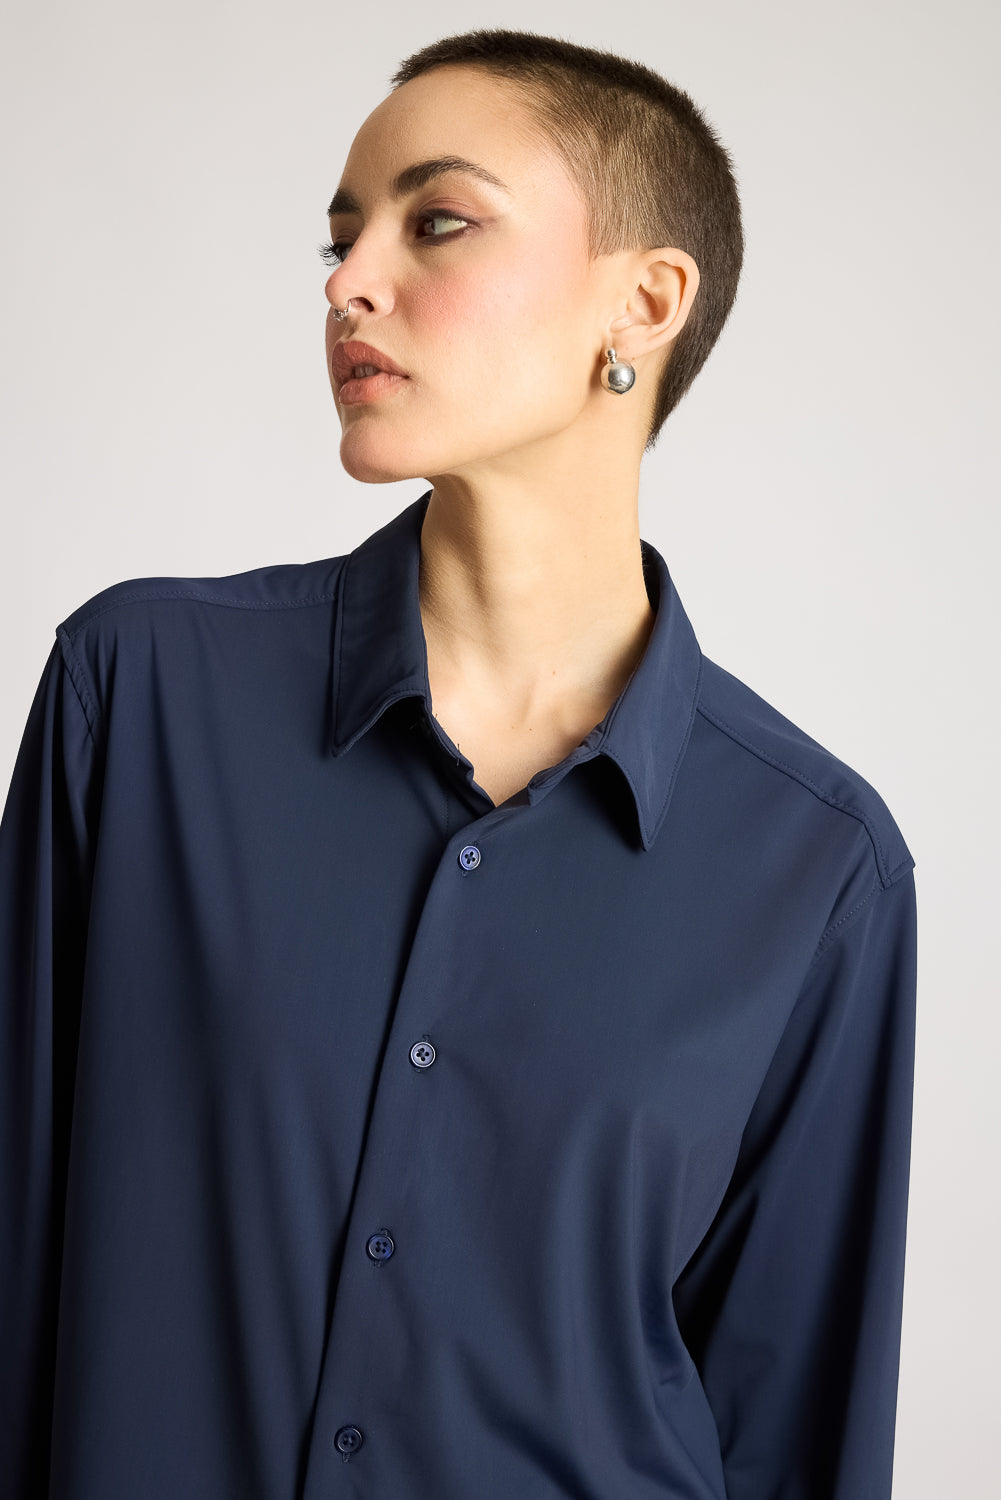 Women's Polyamide Shirt- Navy Blue